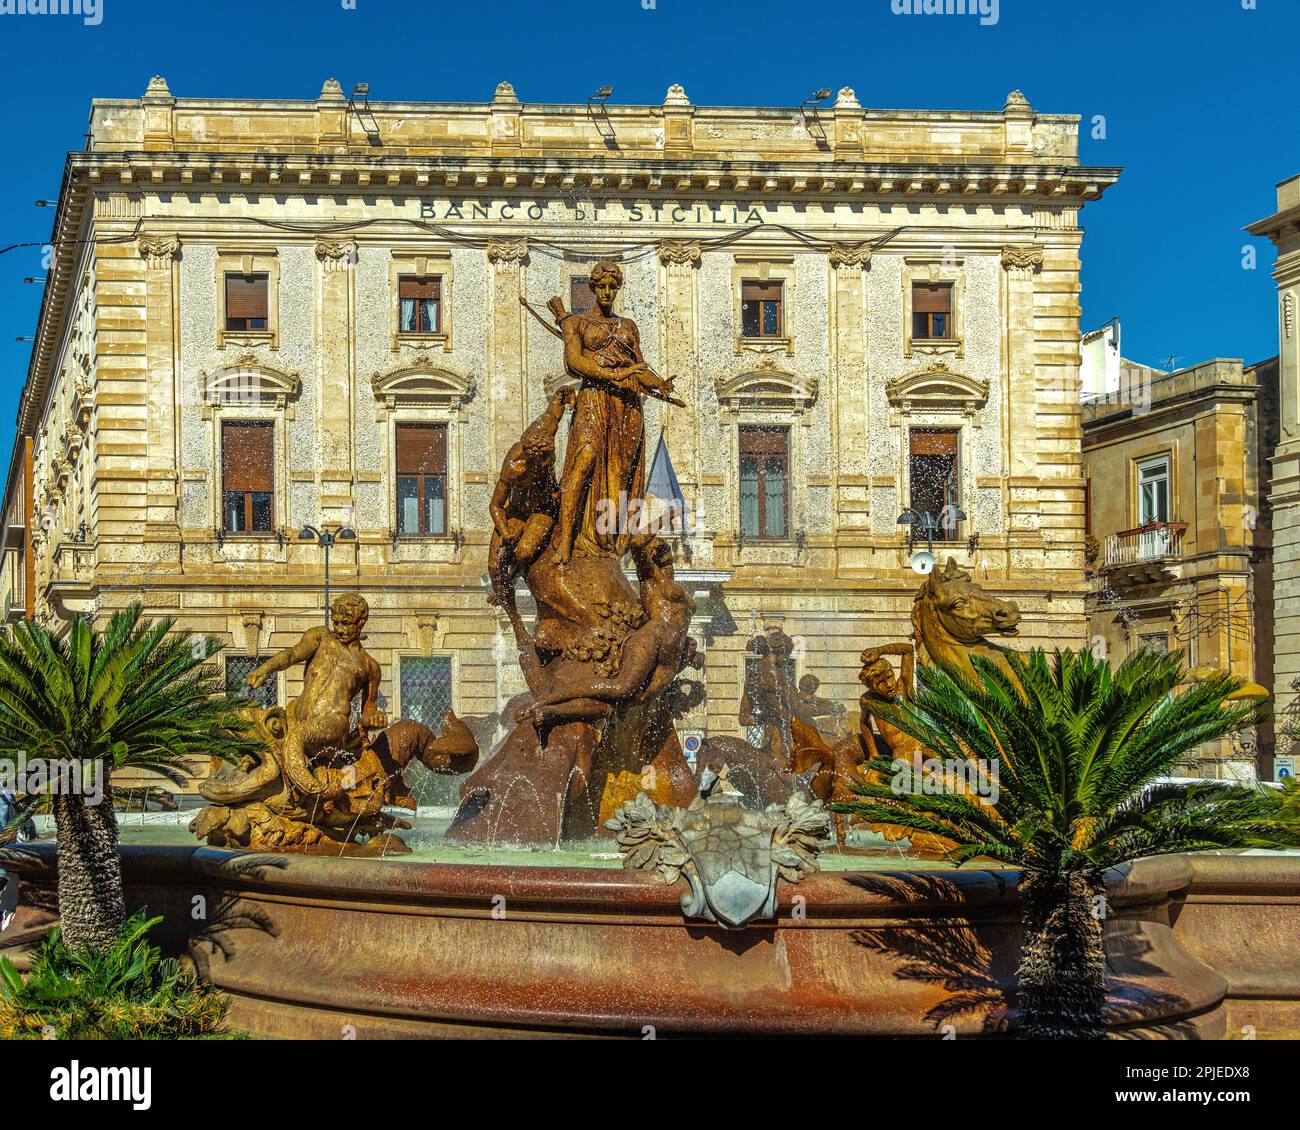 Monumentale fontana Art Nouveau dedicata alla dea della caccia Diana situata in Piazza Archimede a Siracusa. Siracusa, Sicilia, Italia, Europa Foto Stock